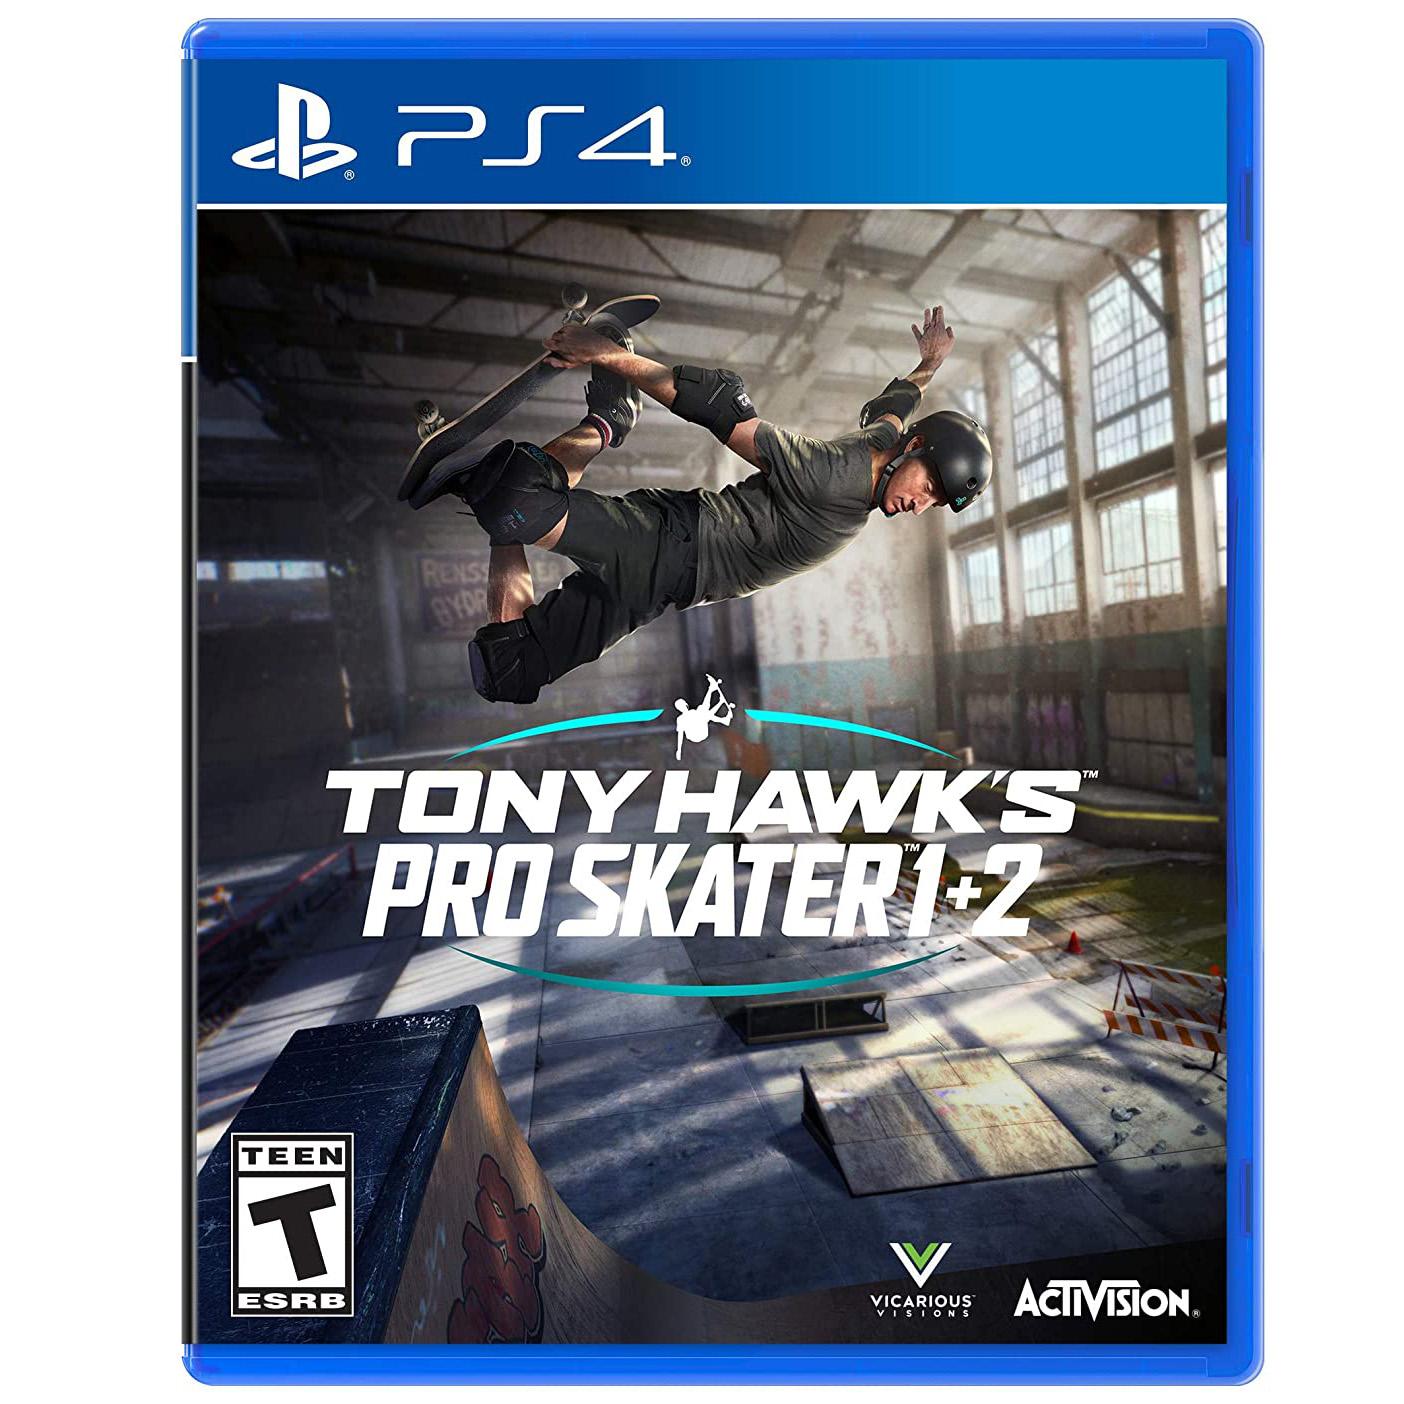 Tony Hawks Pro Skater 1 + 2 Xbox One PS4 for $26.66 Shipped